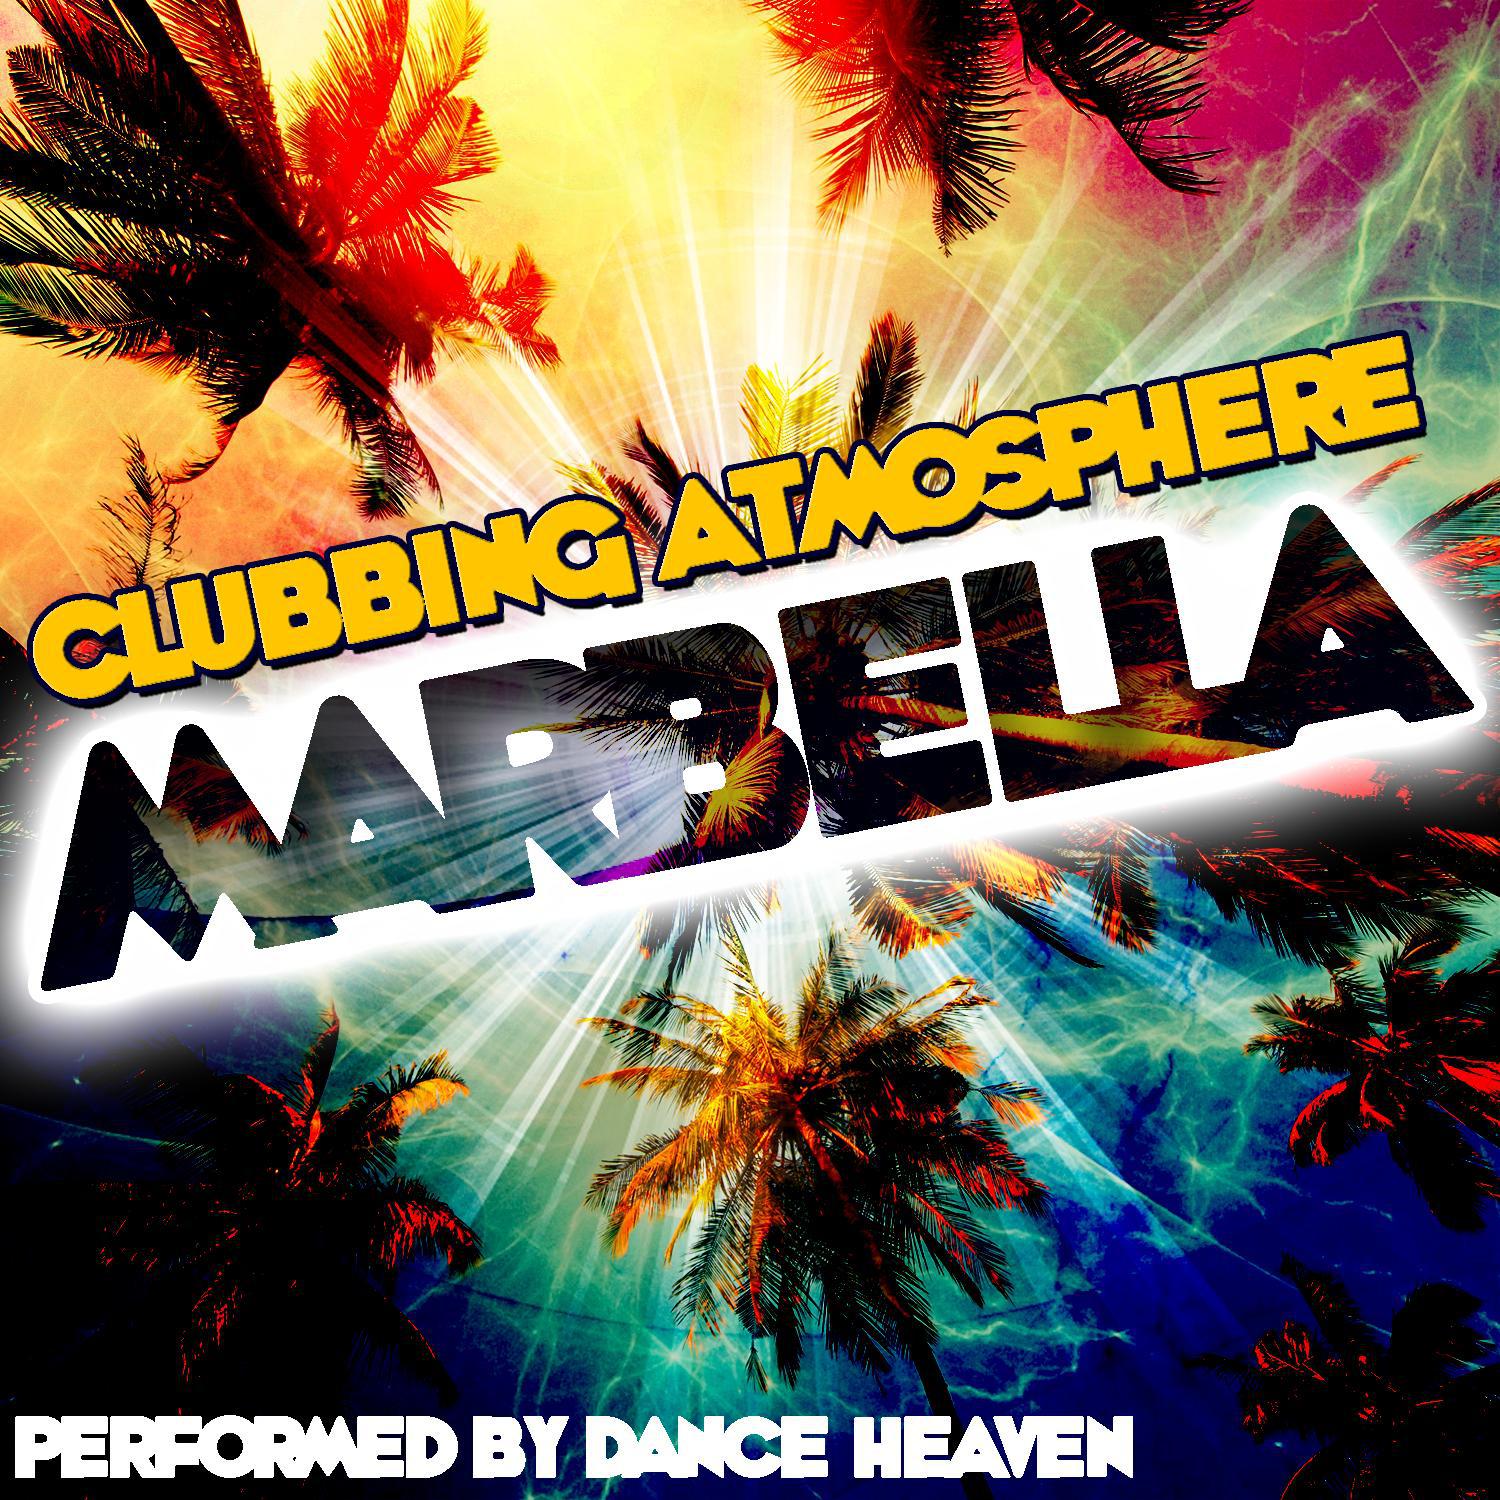 Clubbing Atmosphere: Marbella